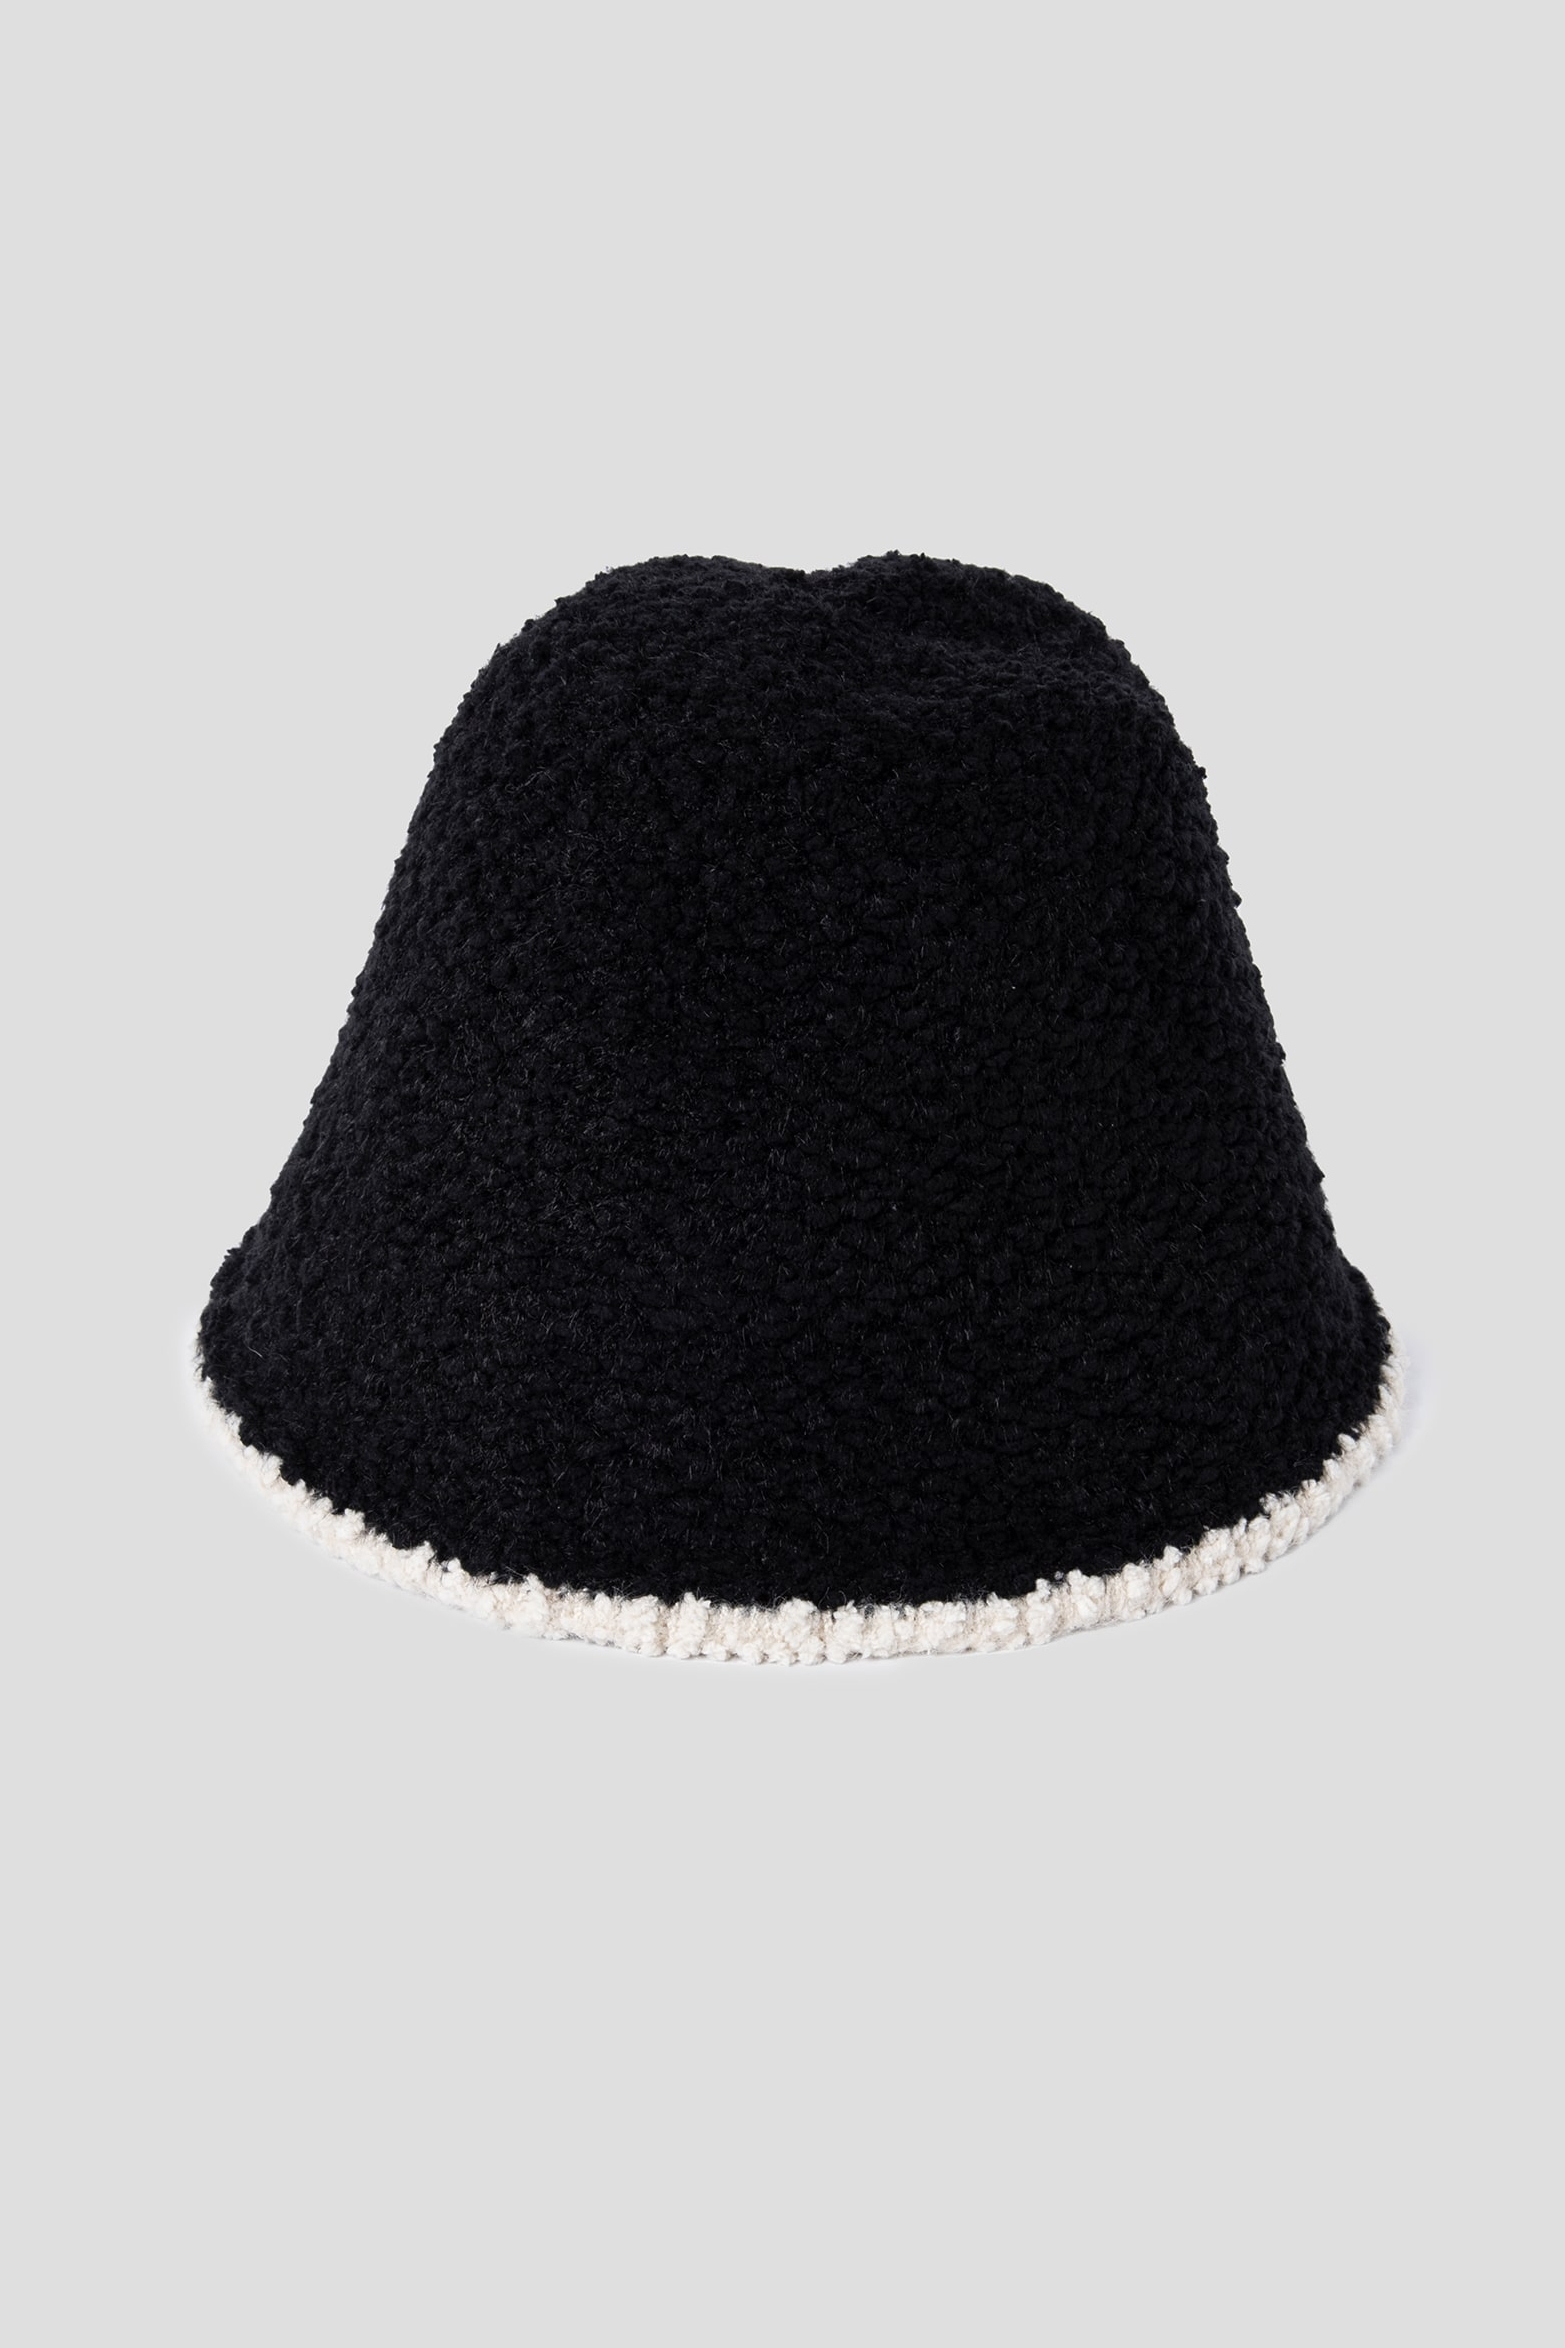 black round hats for women